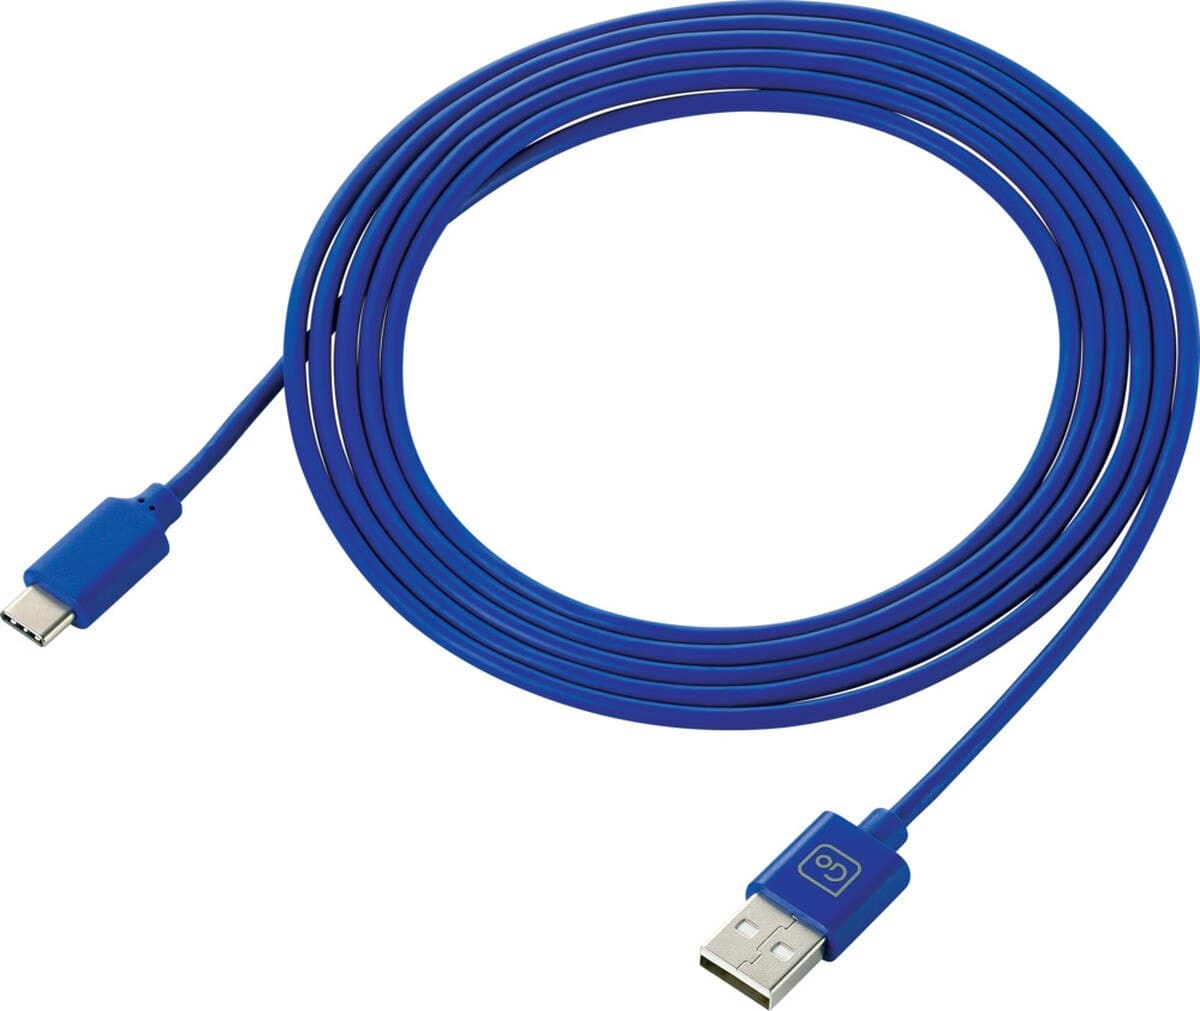 GO TRAVEL 2 METRE USB CABLE BLUE